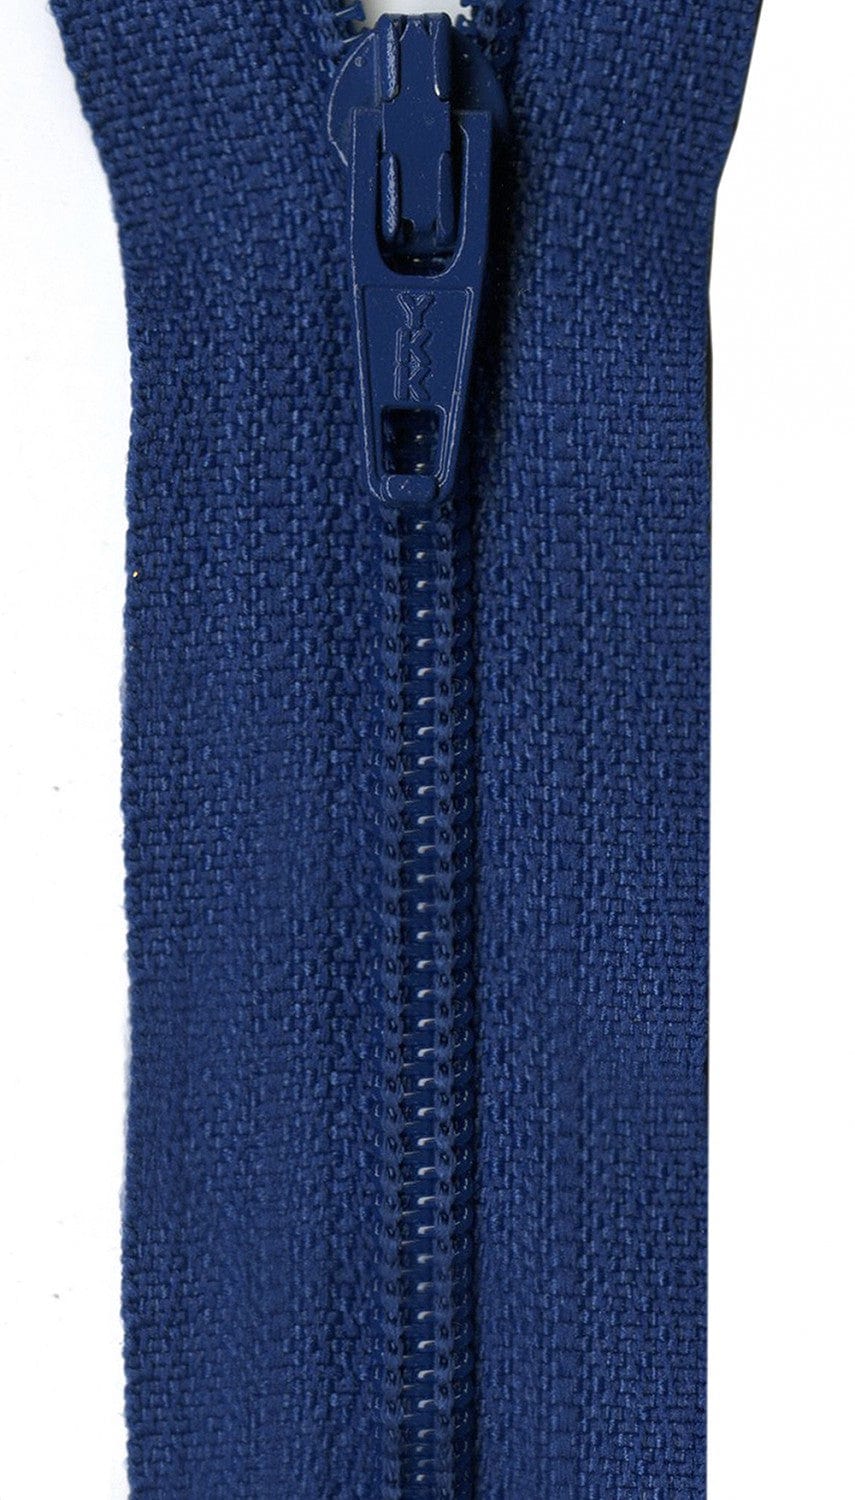 Ziplon Regular Zipper in Royal